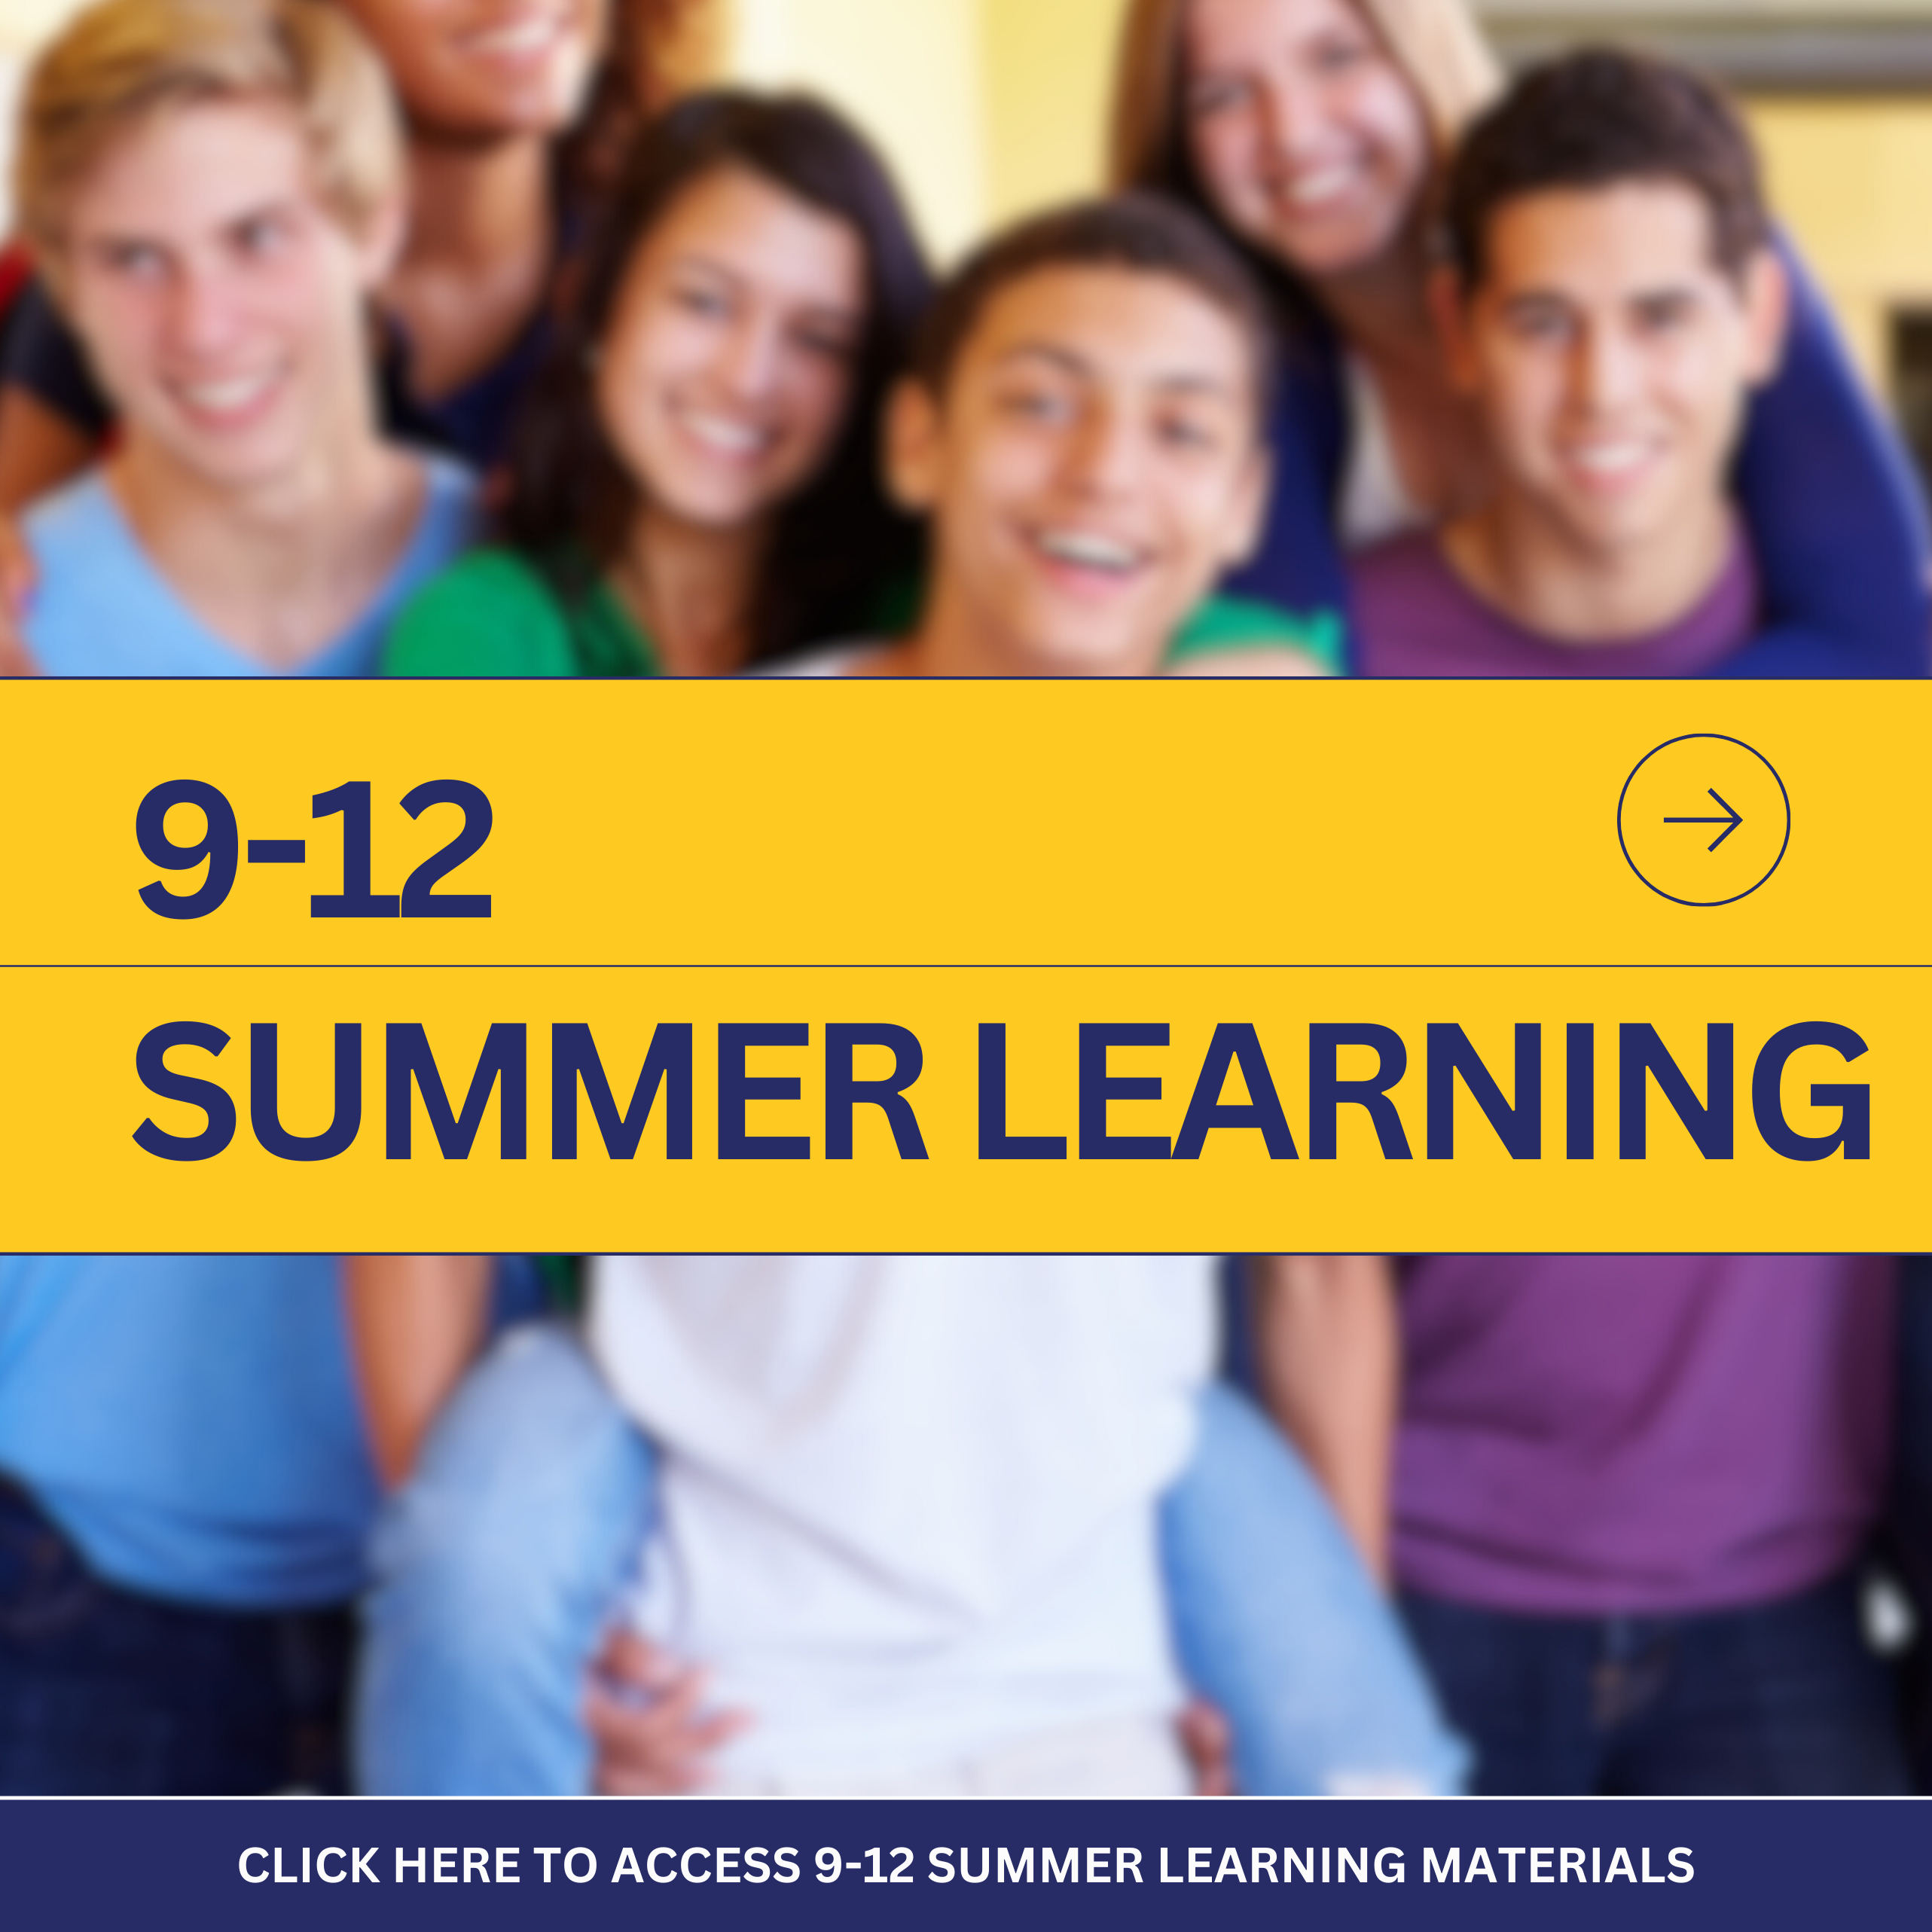 9-12 summer learning